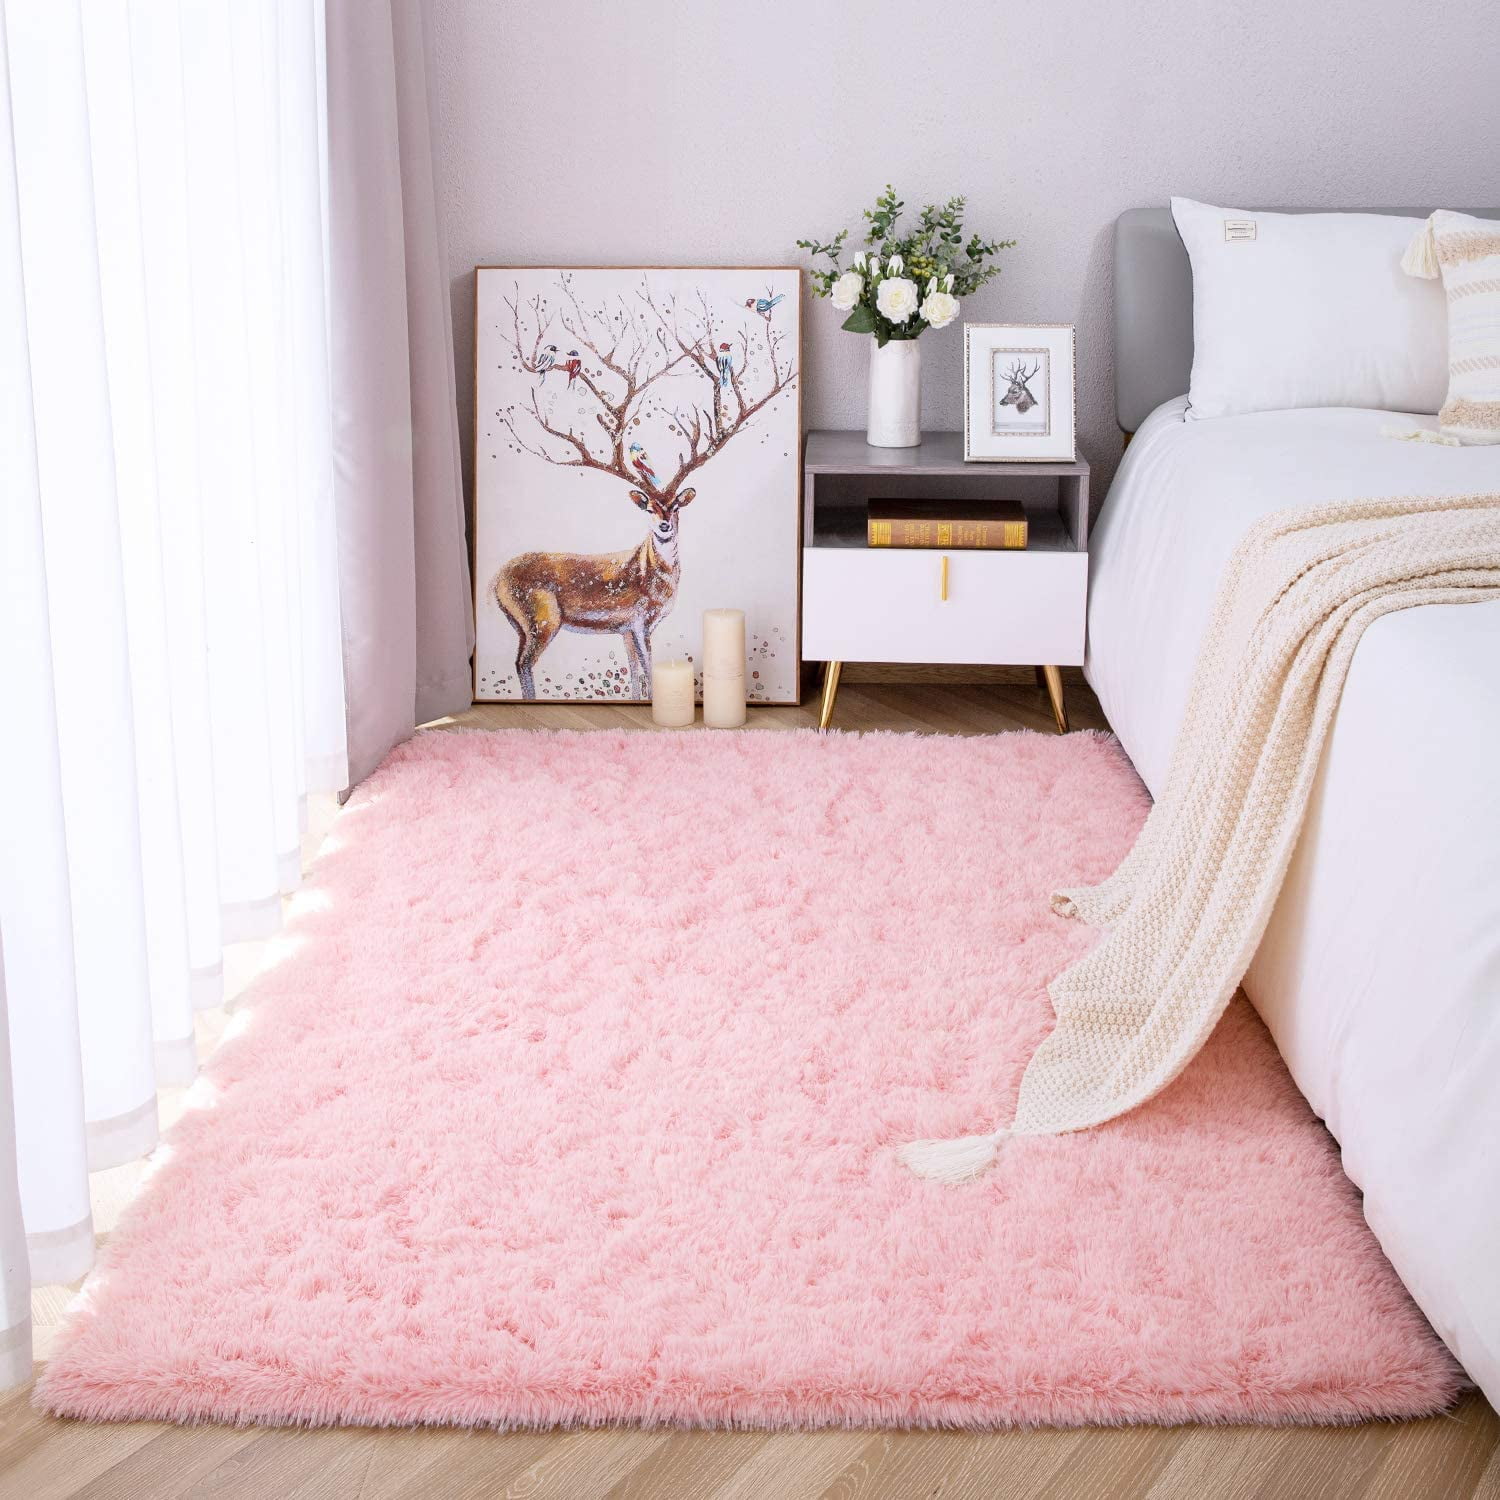 LOCHAS Luxury Fluffy Rug Ultra Soft Shag Carpet for Bedroom Living Room Big  Area Rugs, 3'x5',Pink